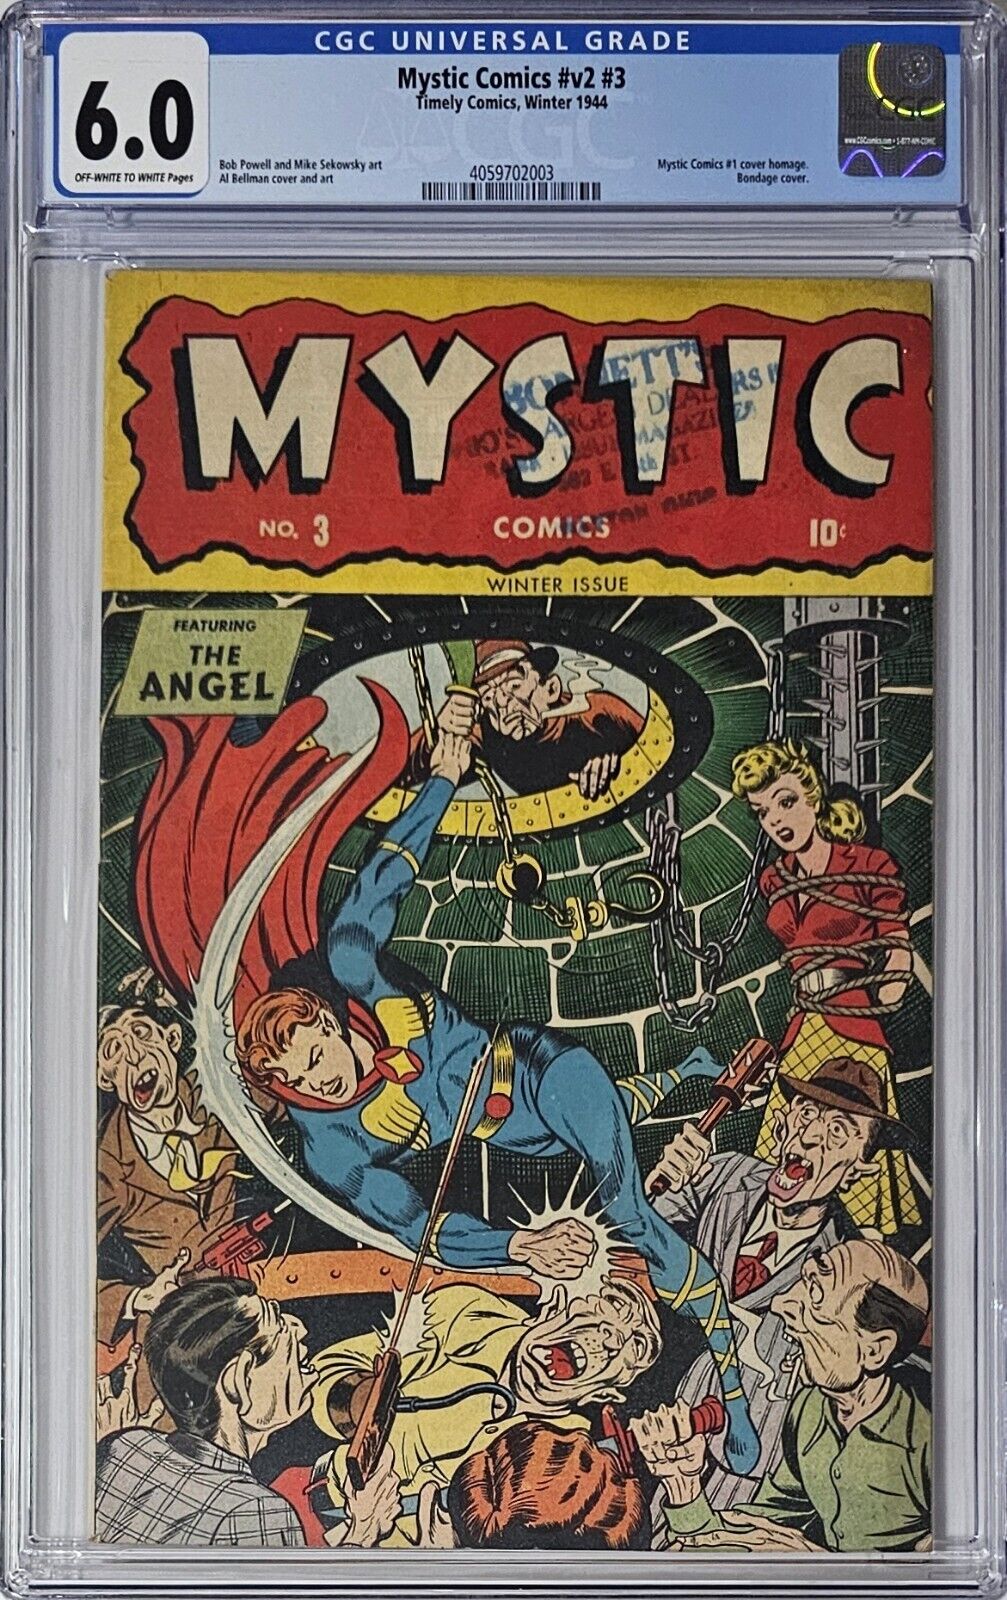 Mystic Comics #v2 #3 CGC 6.0 Timely Comics Winter 1944 #1 Homage Bondage Cover